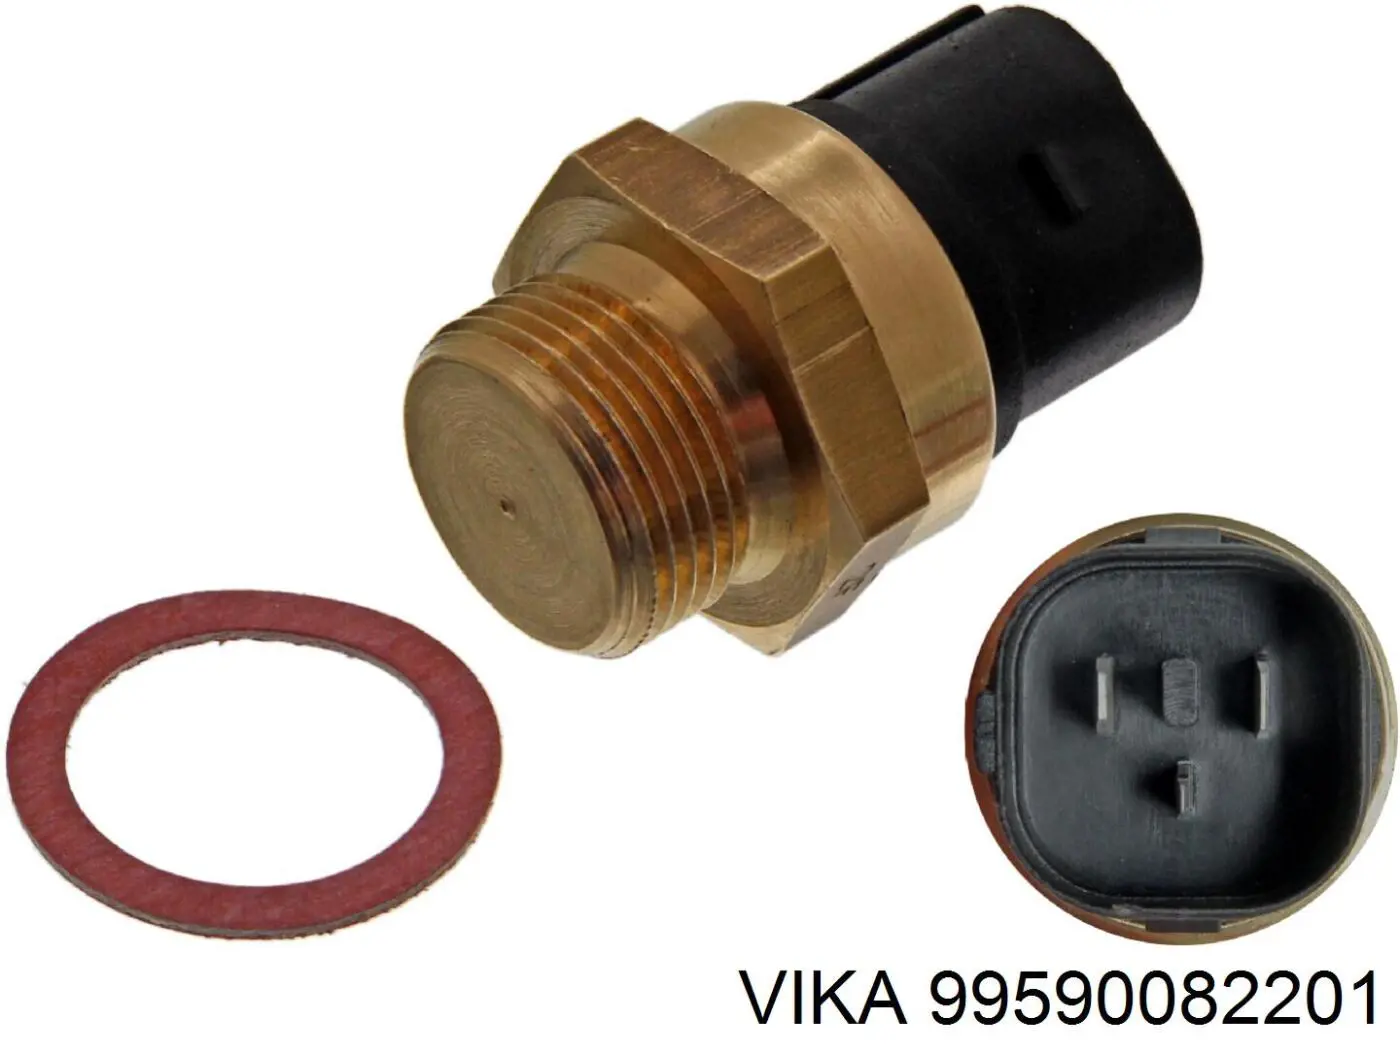 99590082201 Vika sensor, temperatura del refrigerante (encendido el ventilador del radiador)